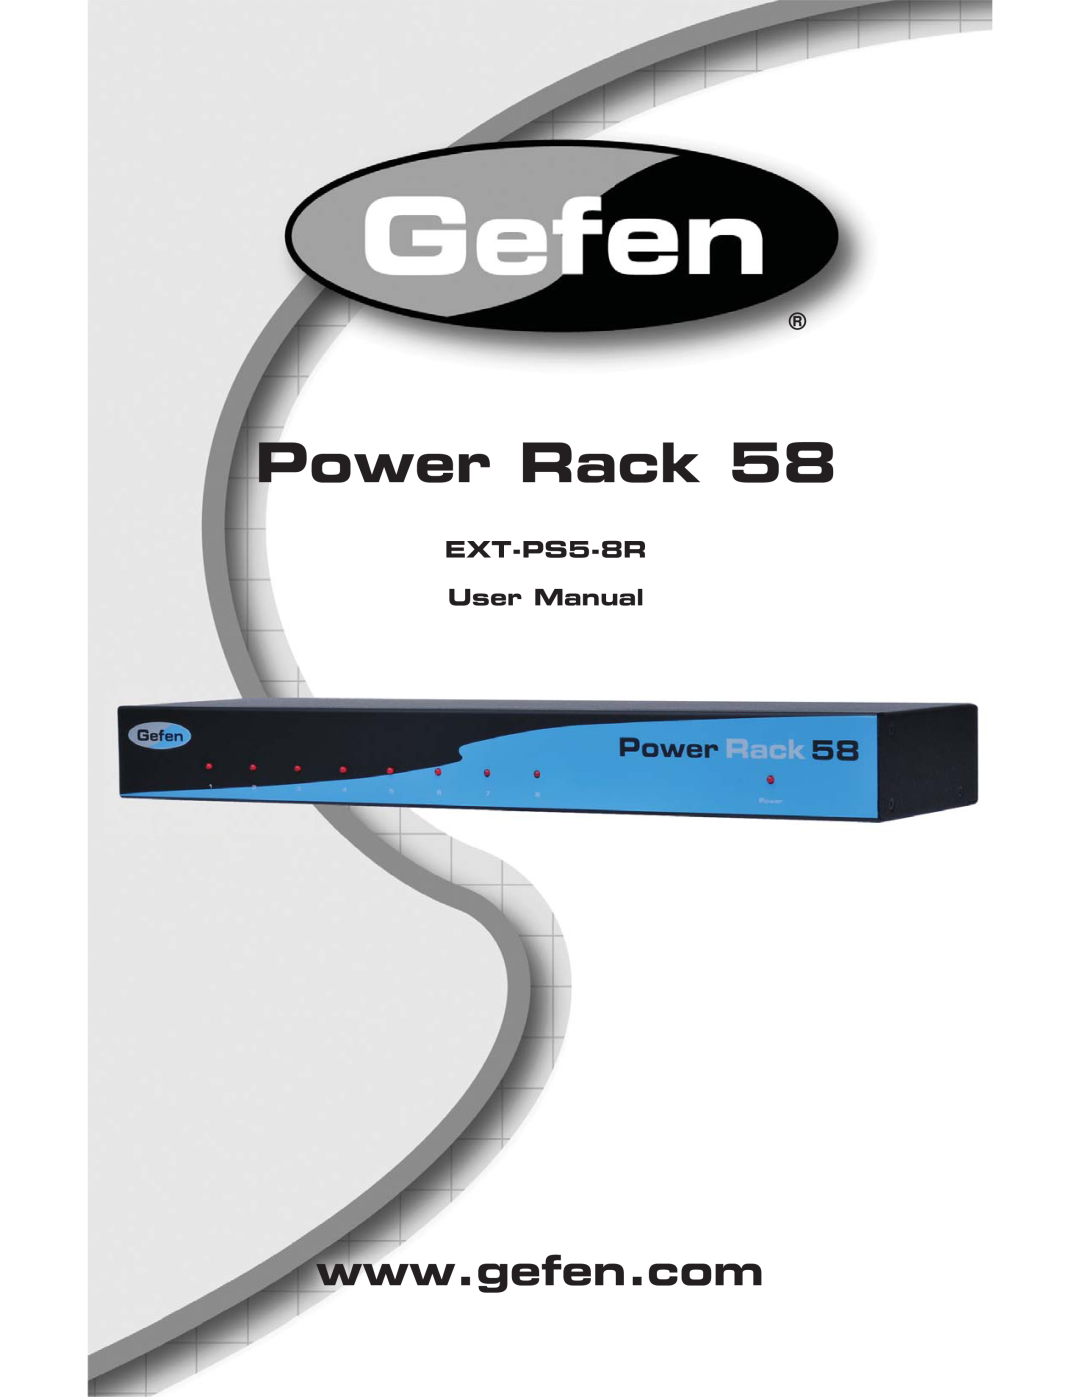 Gefen user manual EXT-PS5-8R User Manual, Power Rack 